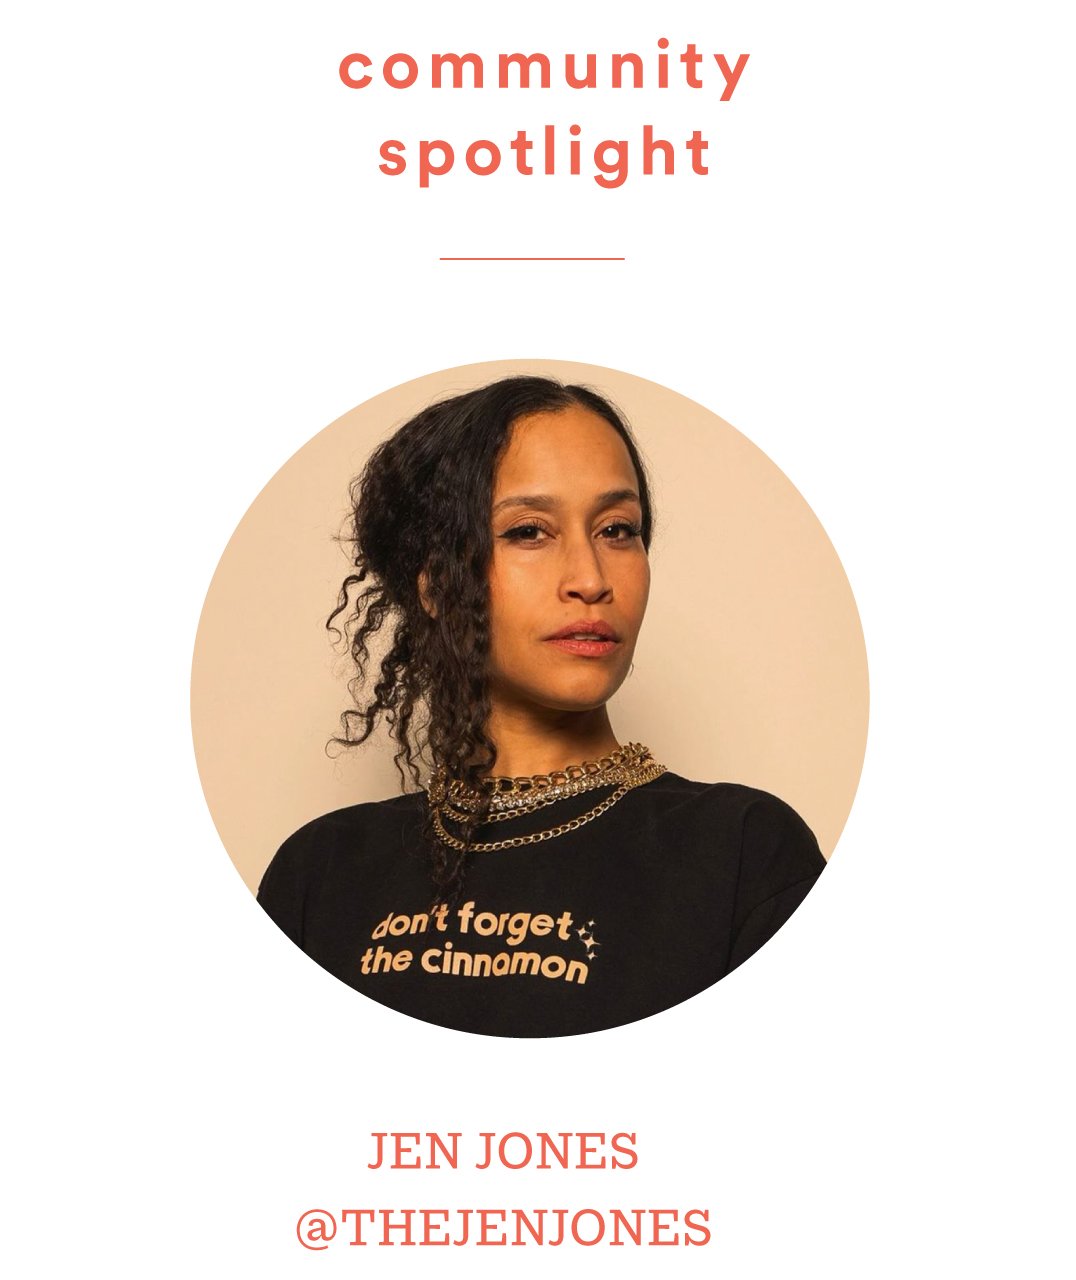 Community spotlight: Jen Jones